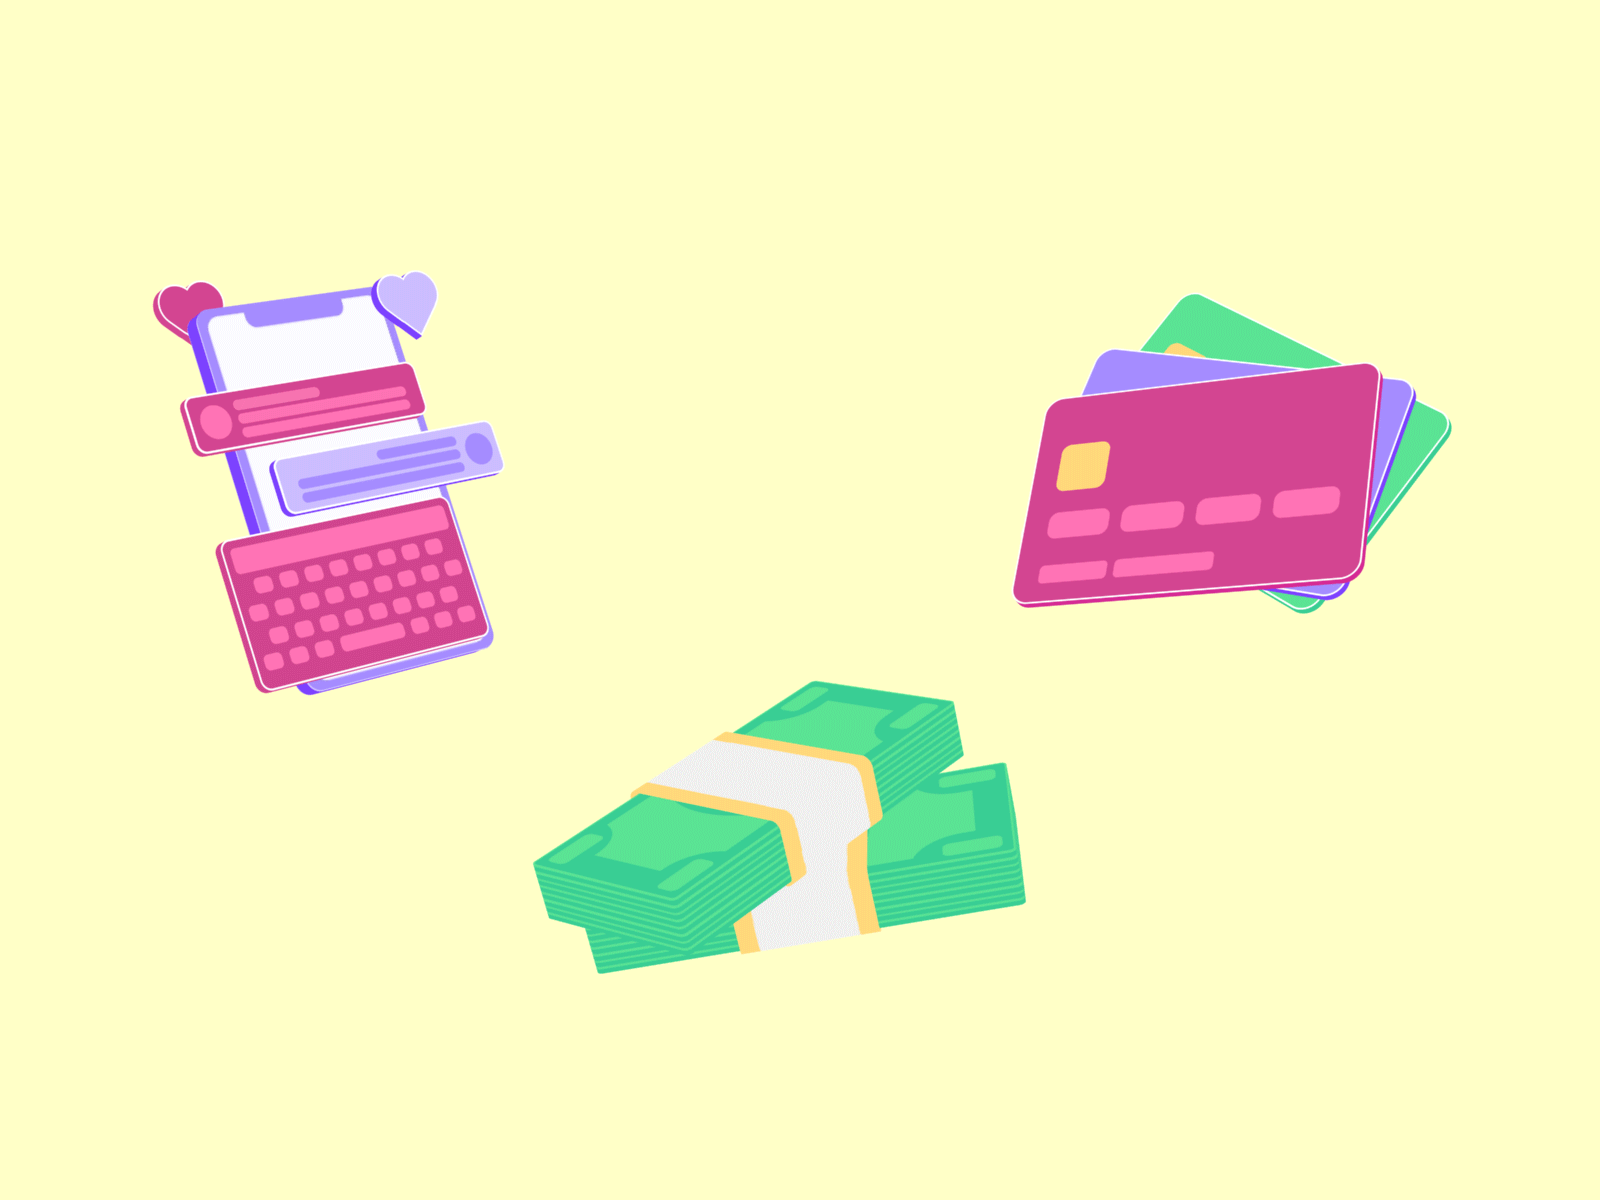 Phone+Cards+Cash